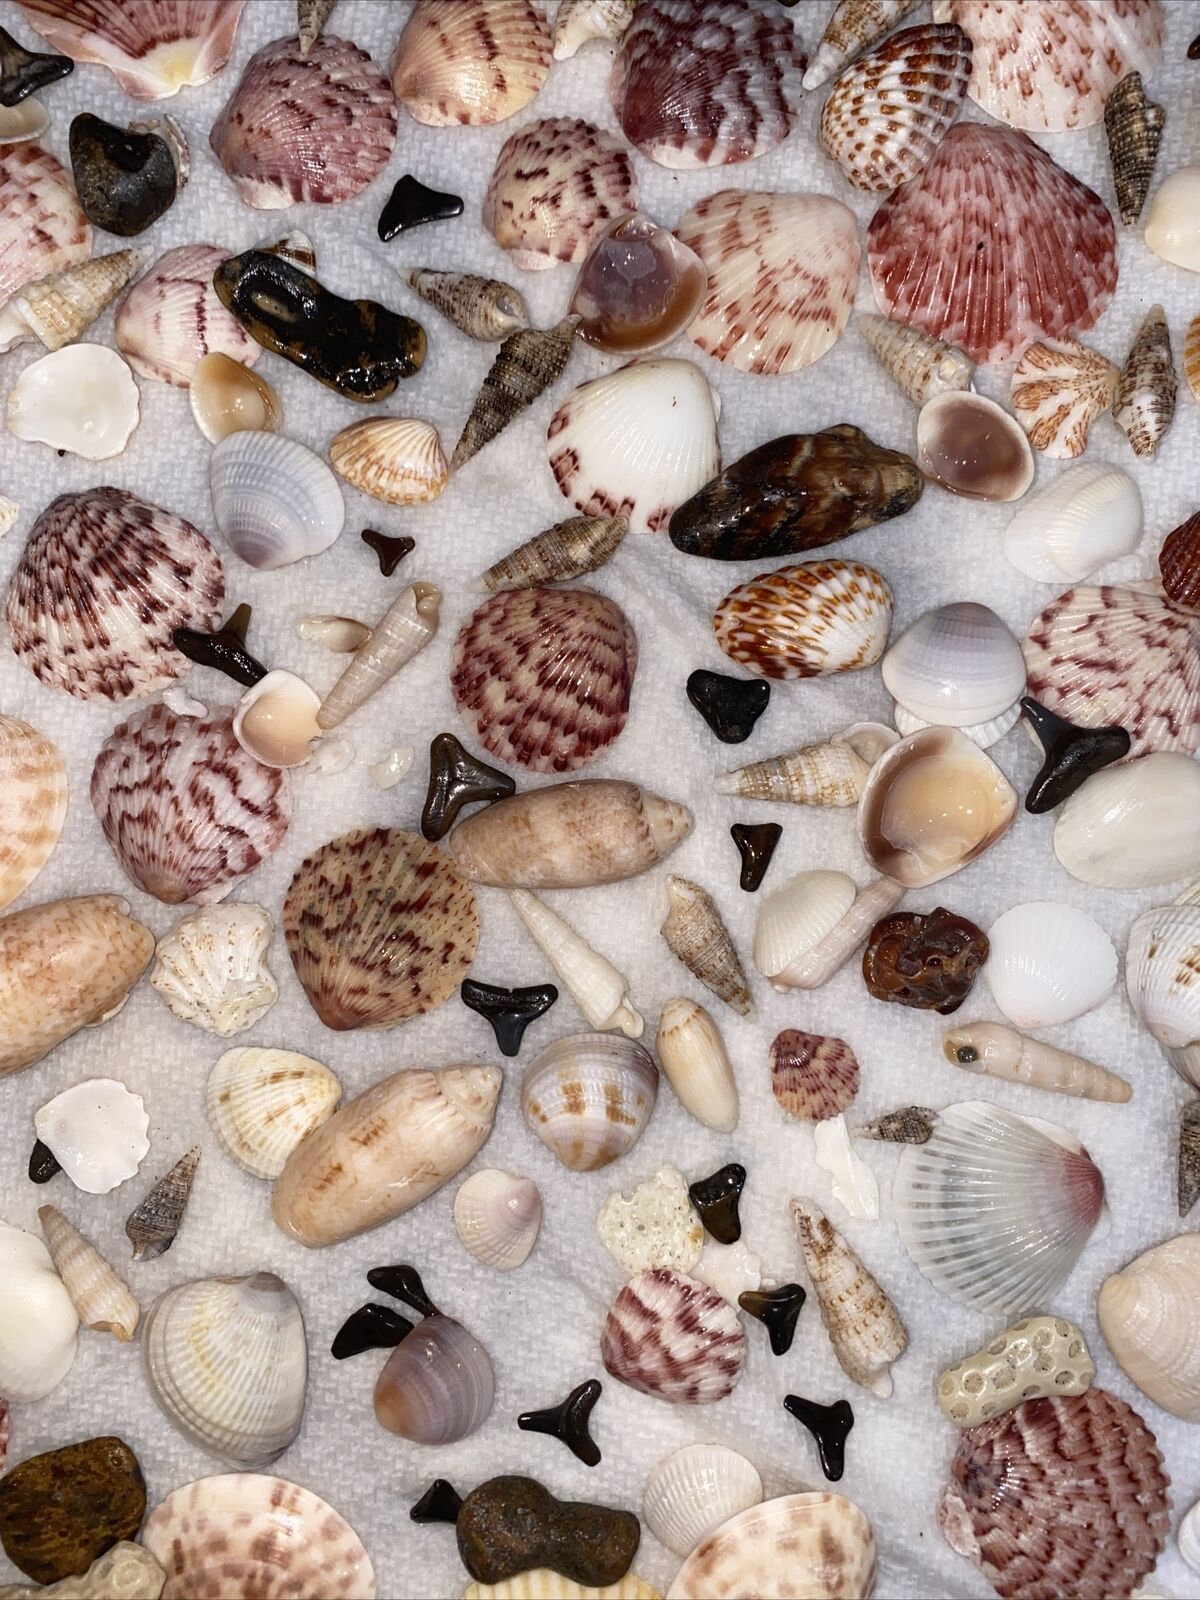 50+ Florida Seashells From The Gulf Coast Beaches Stunning Handpicked